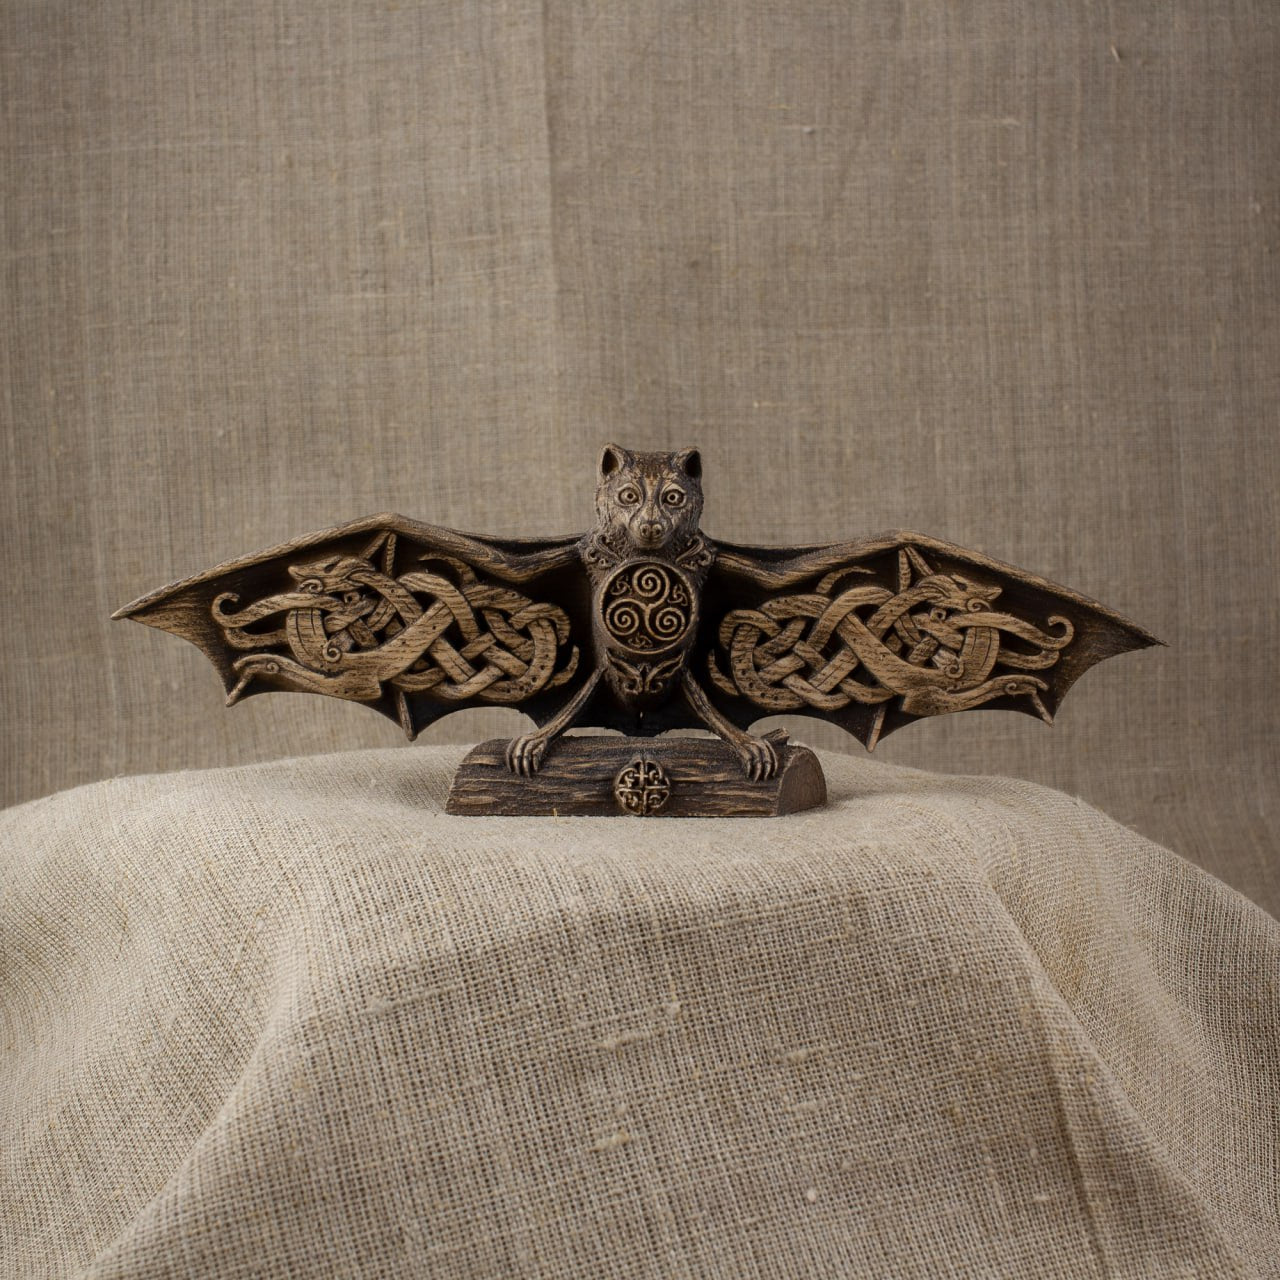 Enchanting Wooden Bat Sculpture: Capturing the Magic of Norse and Celtic Mythology